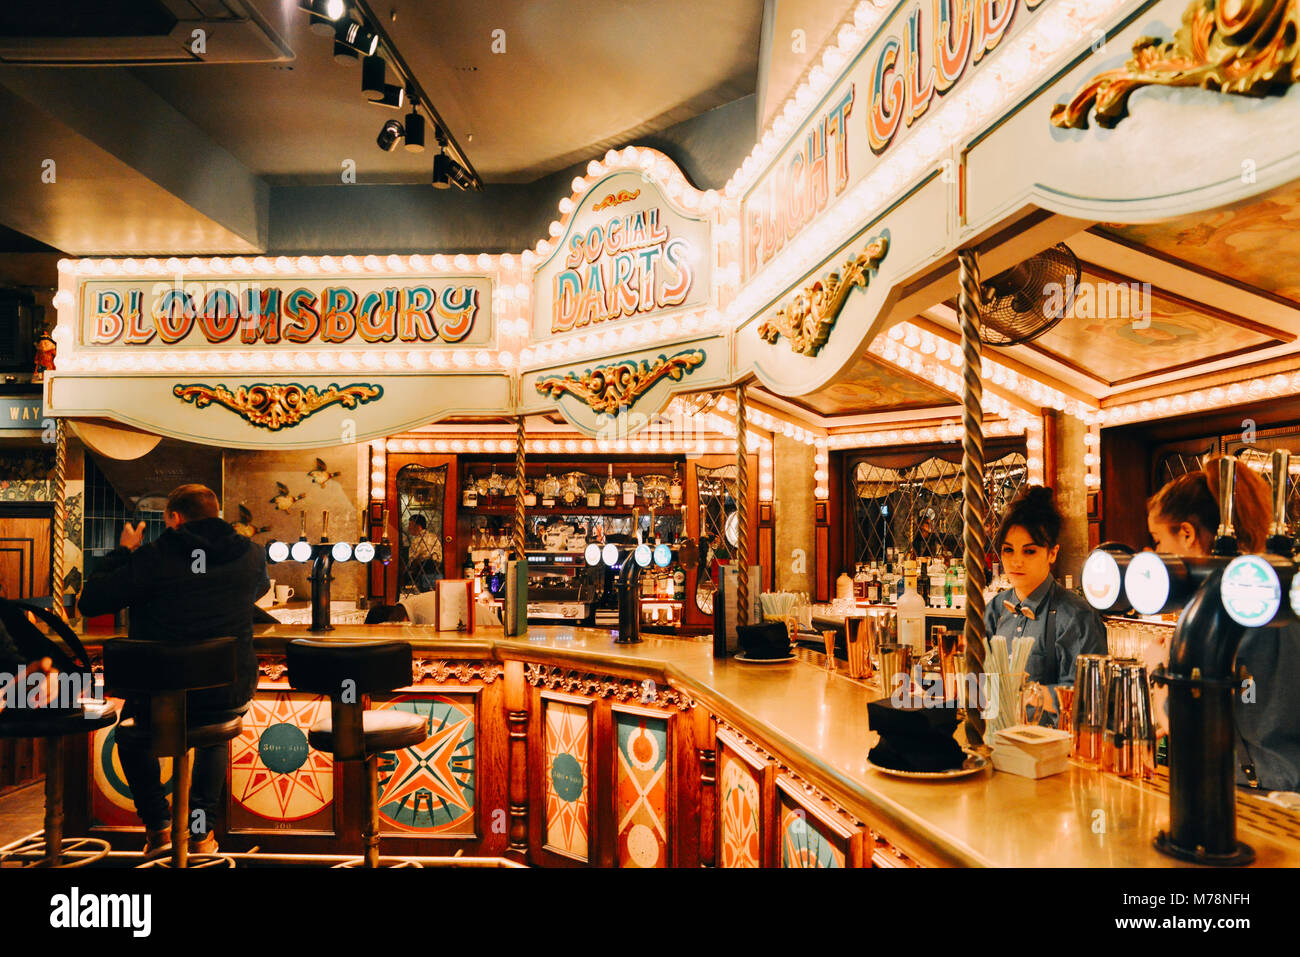 London, UK - Mar 6, 2018: Bright carnival fair style bar at the Flight Cub, a vintage social digital darts club premises in Bloomsbury, London Stock Photo